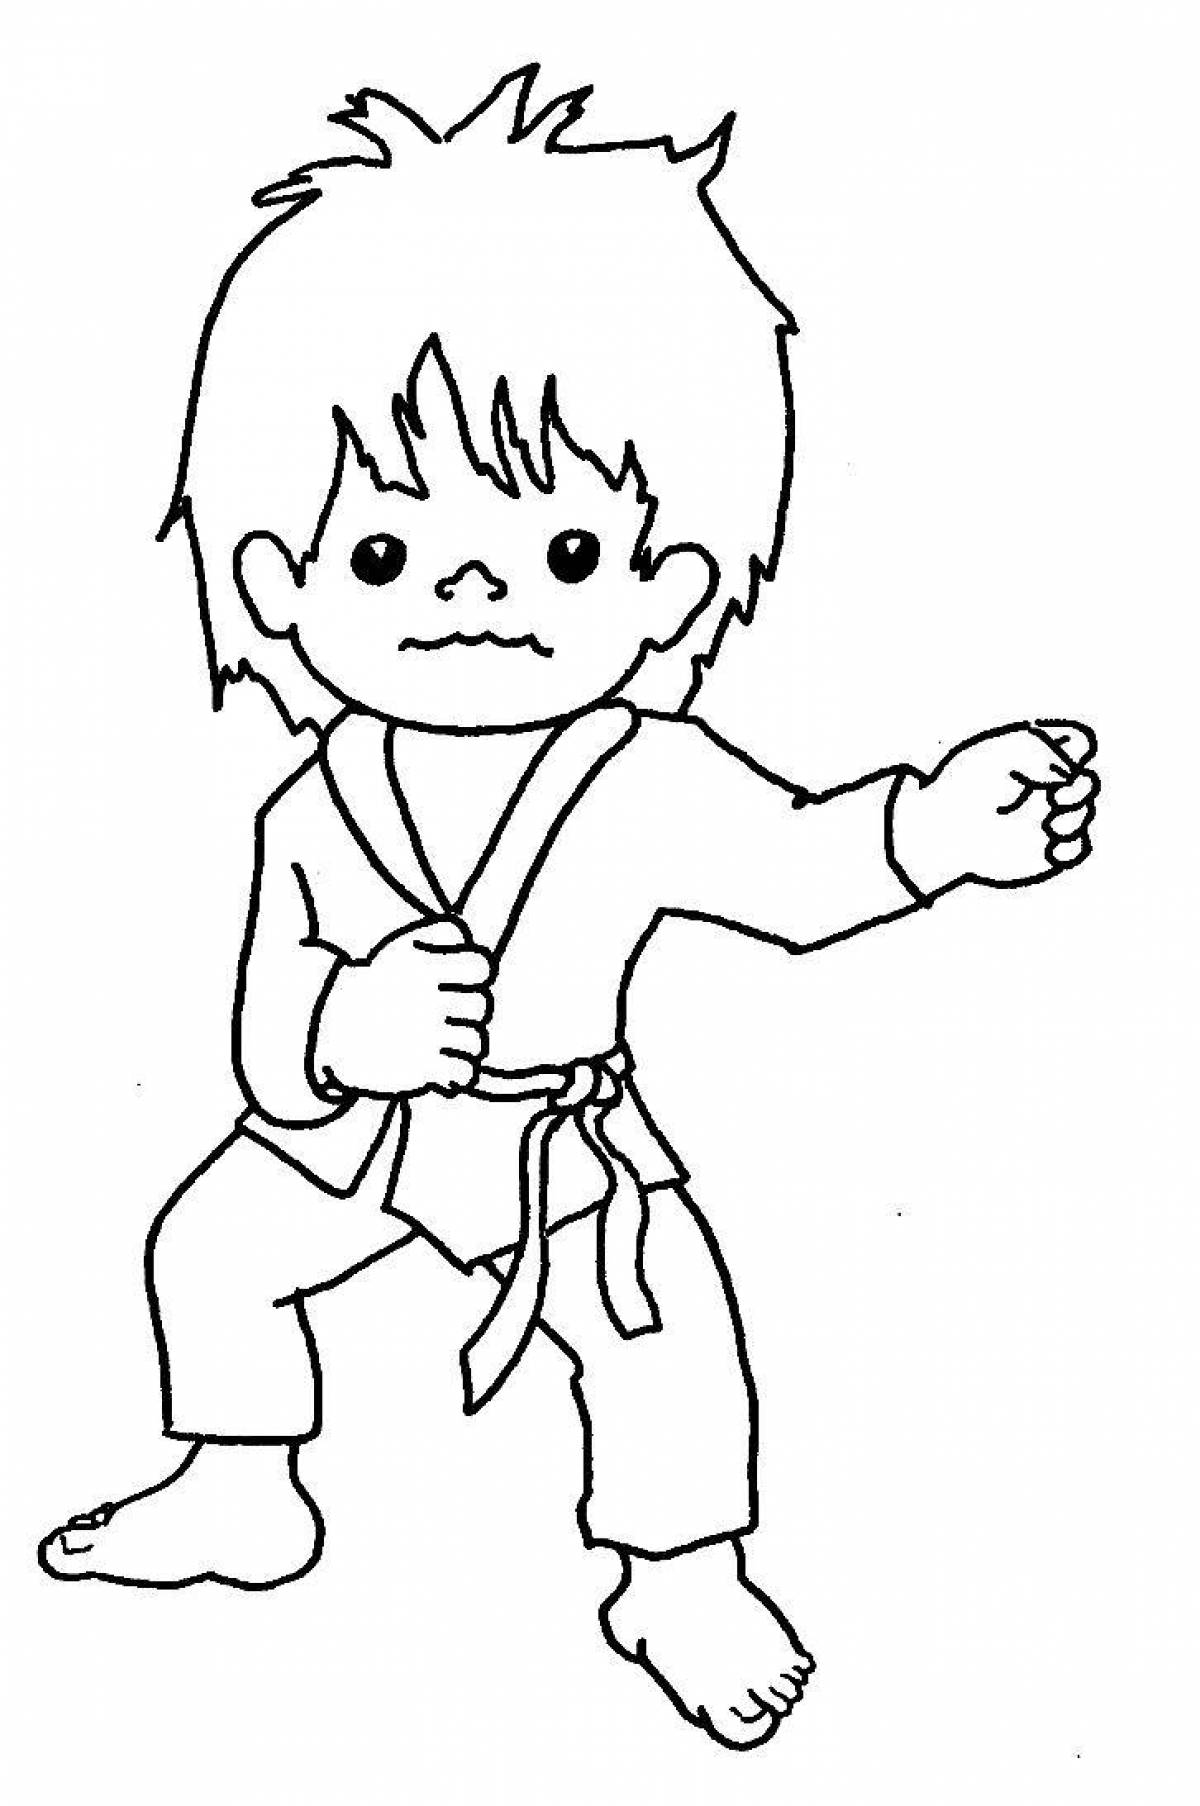 Taekwondo creative coloring book